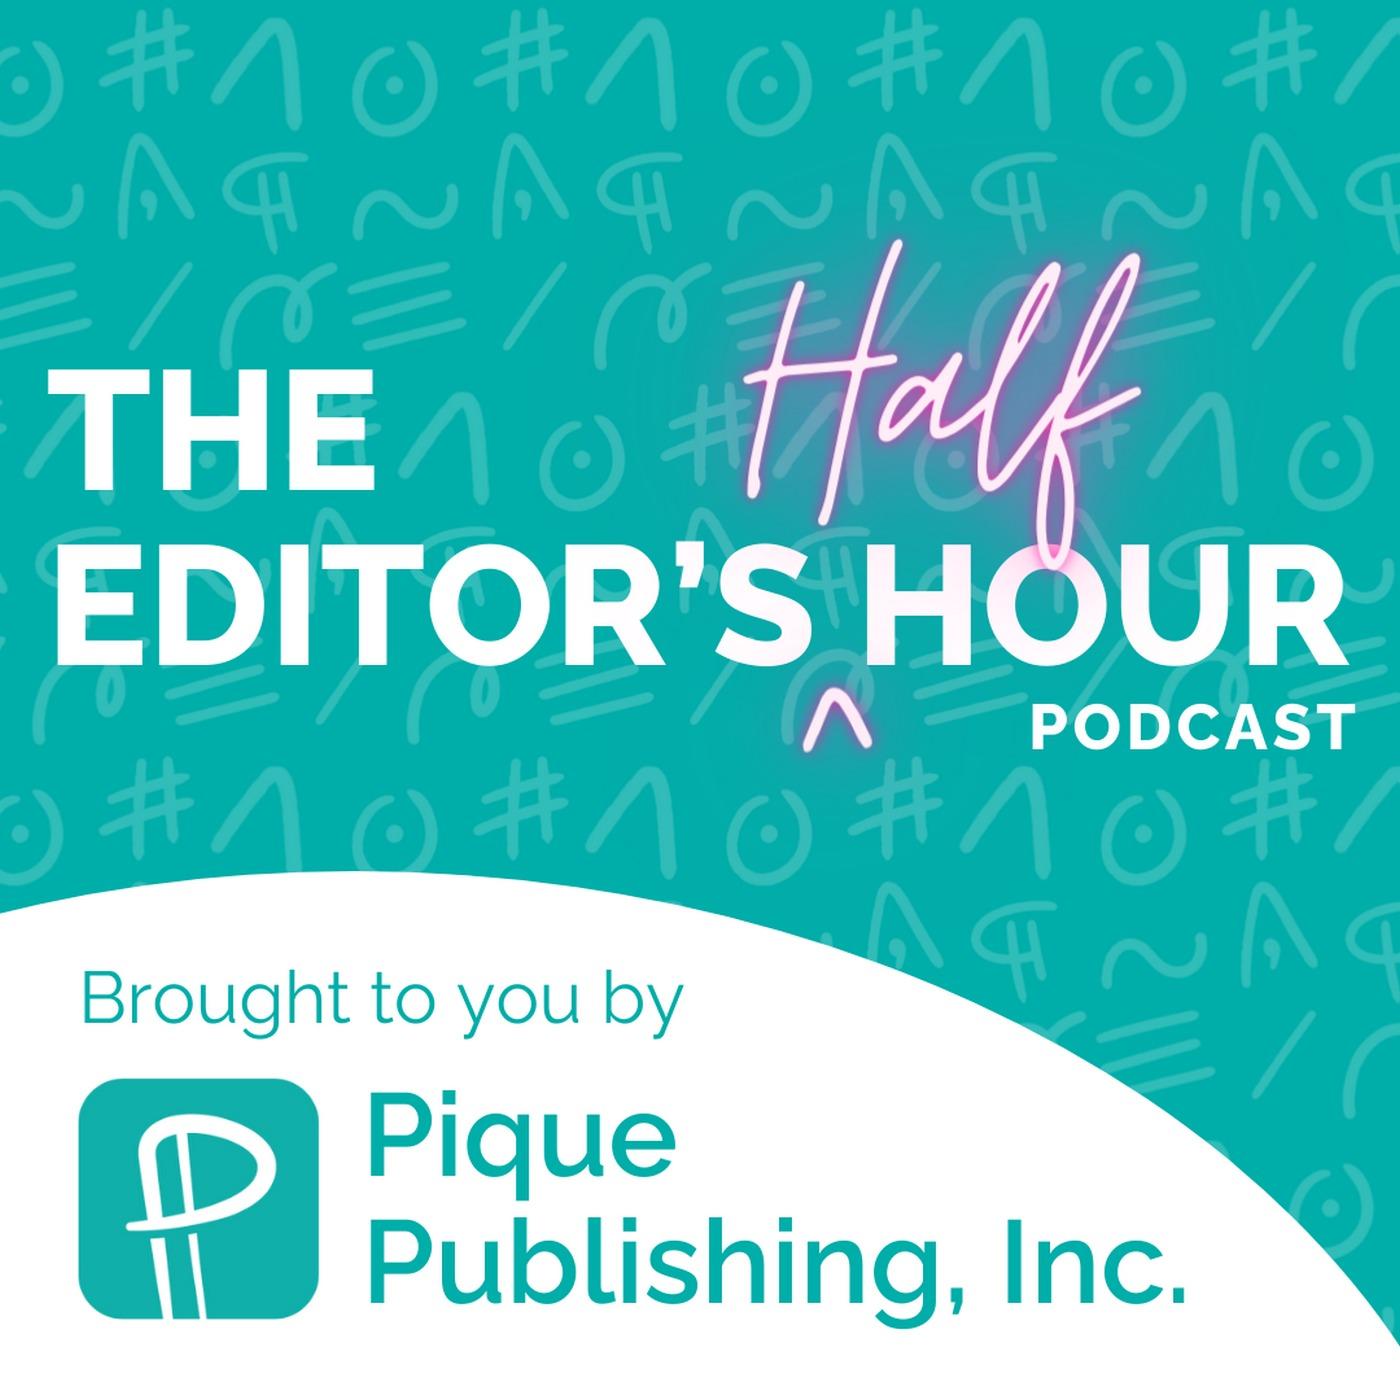 The Editor's Half Hour